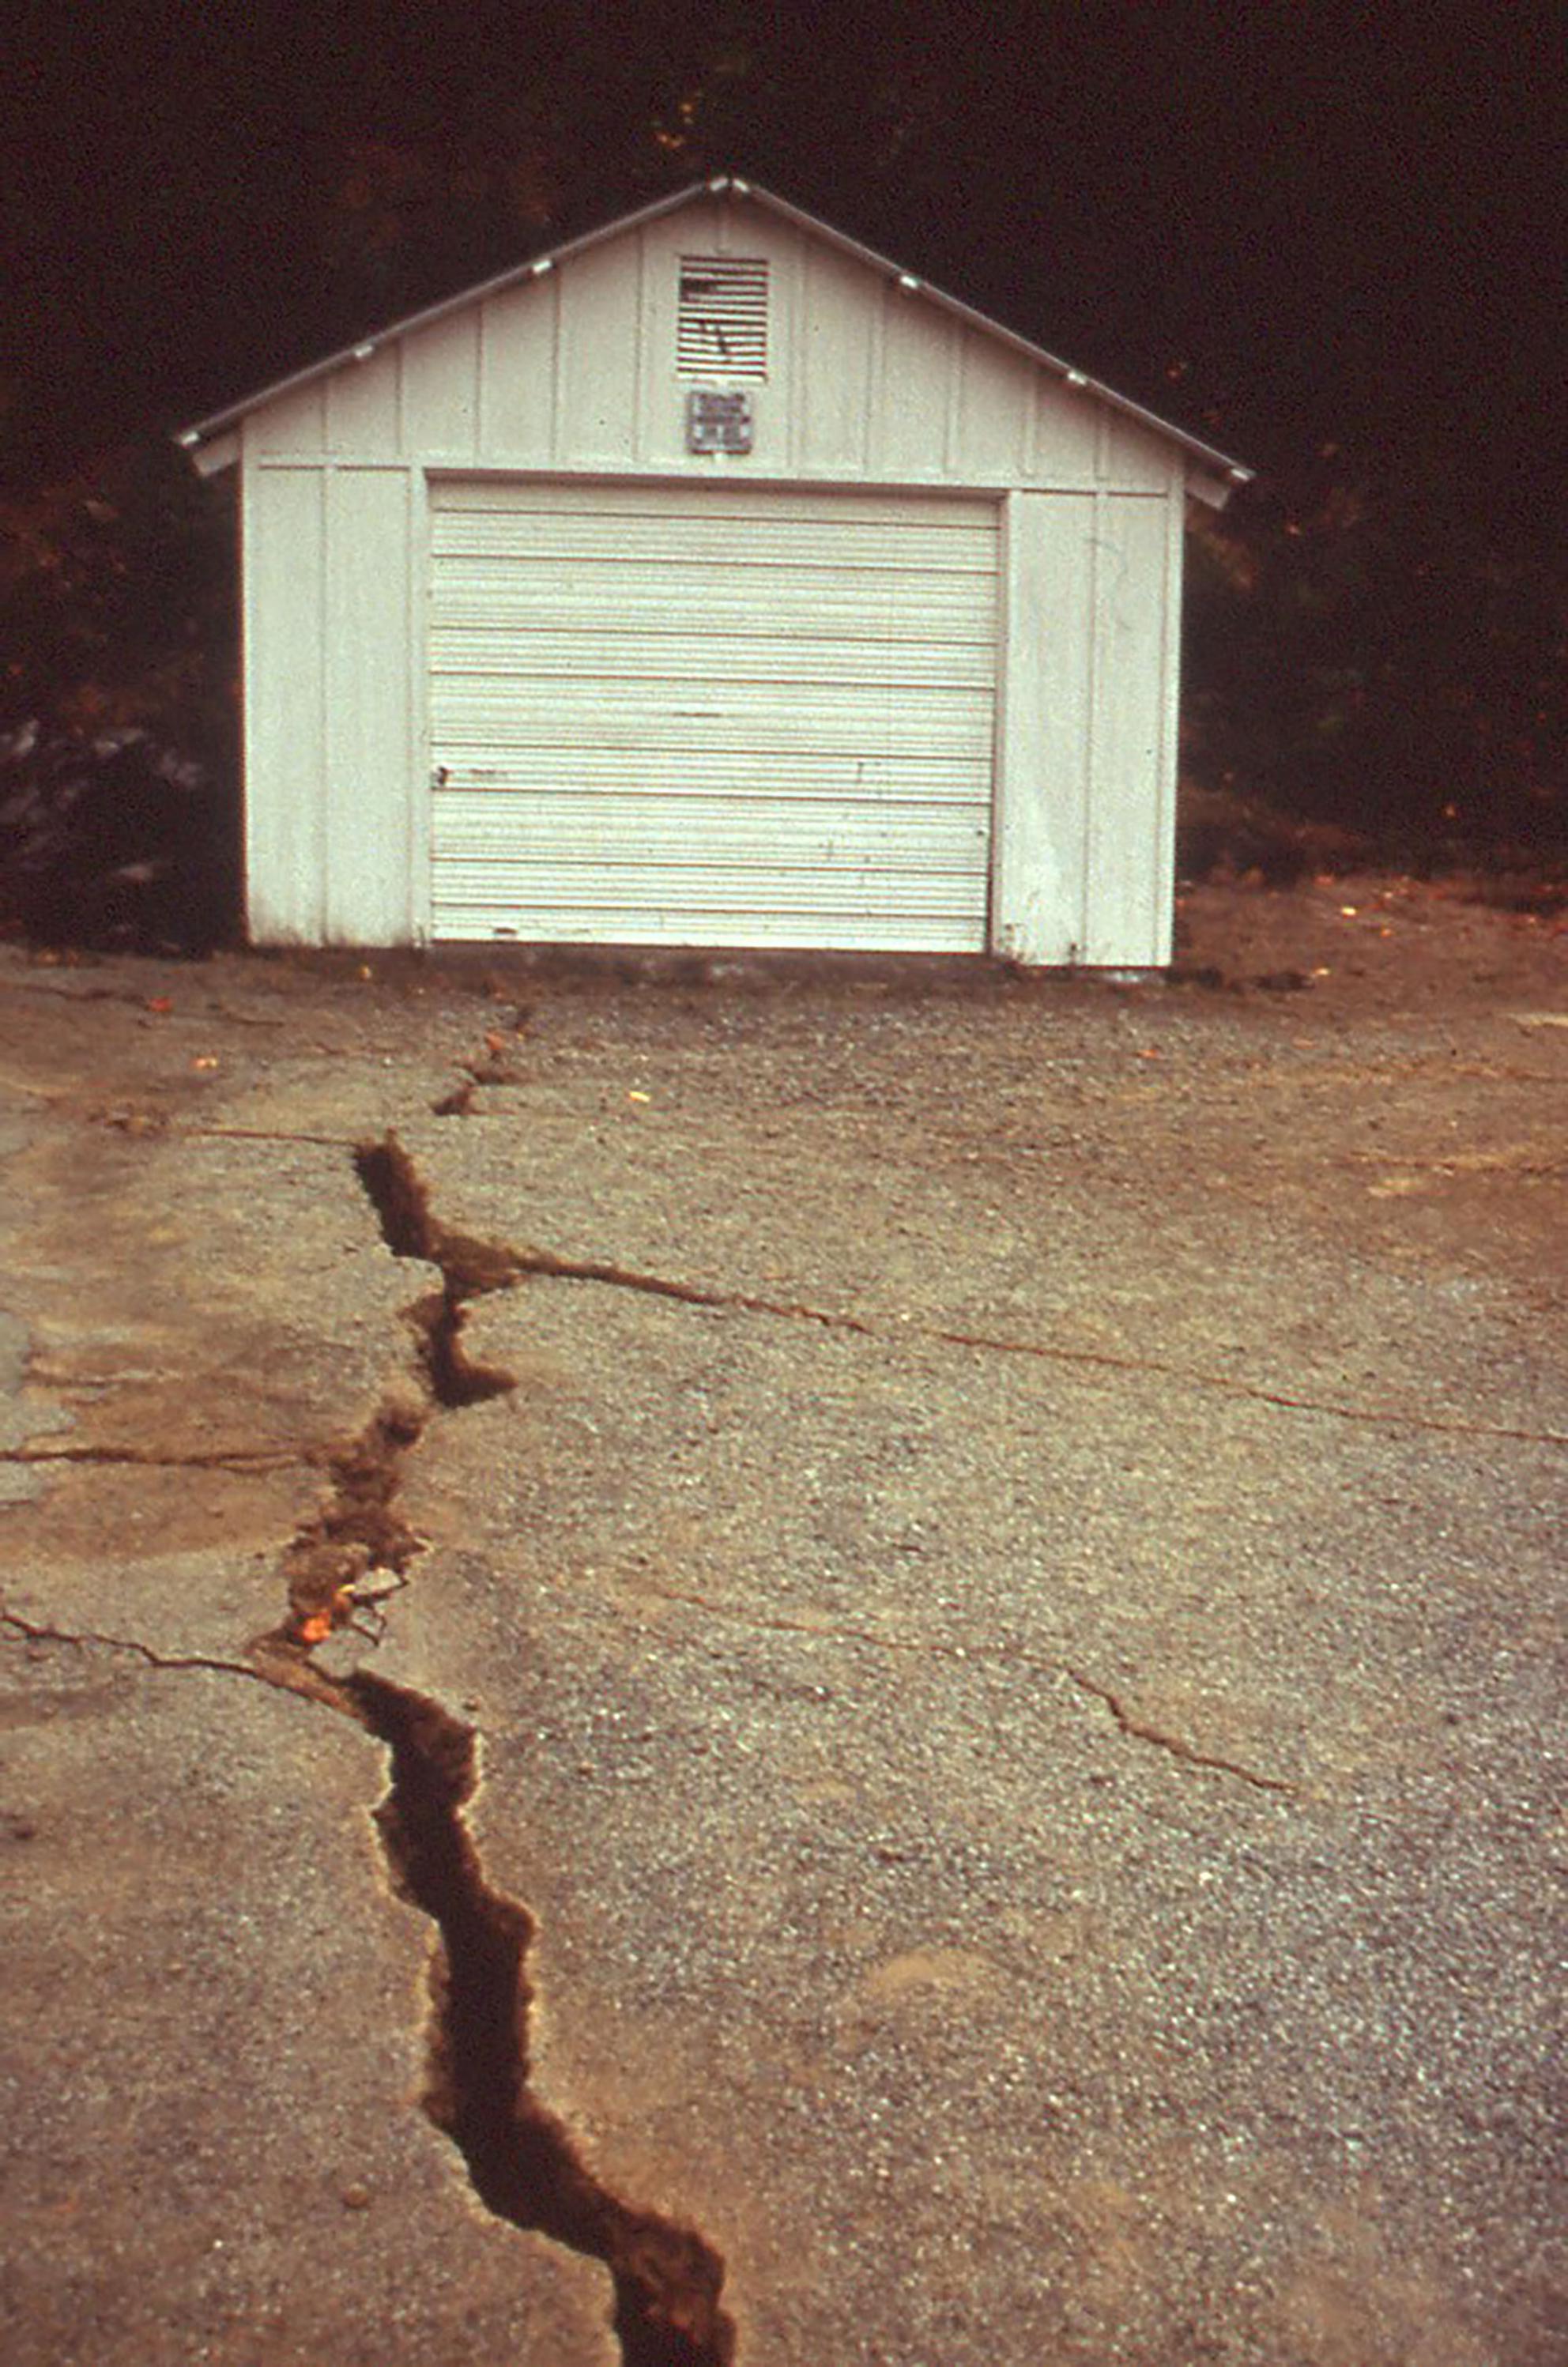 earthquake crack on the ground